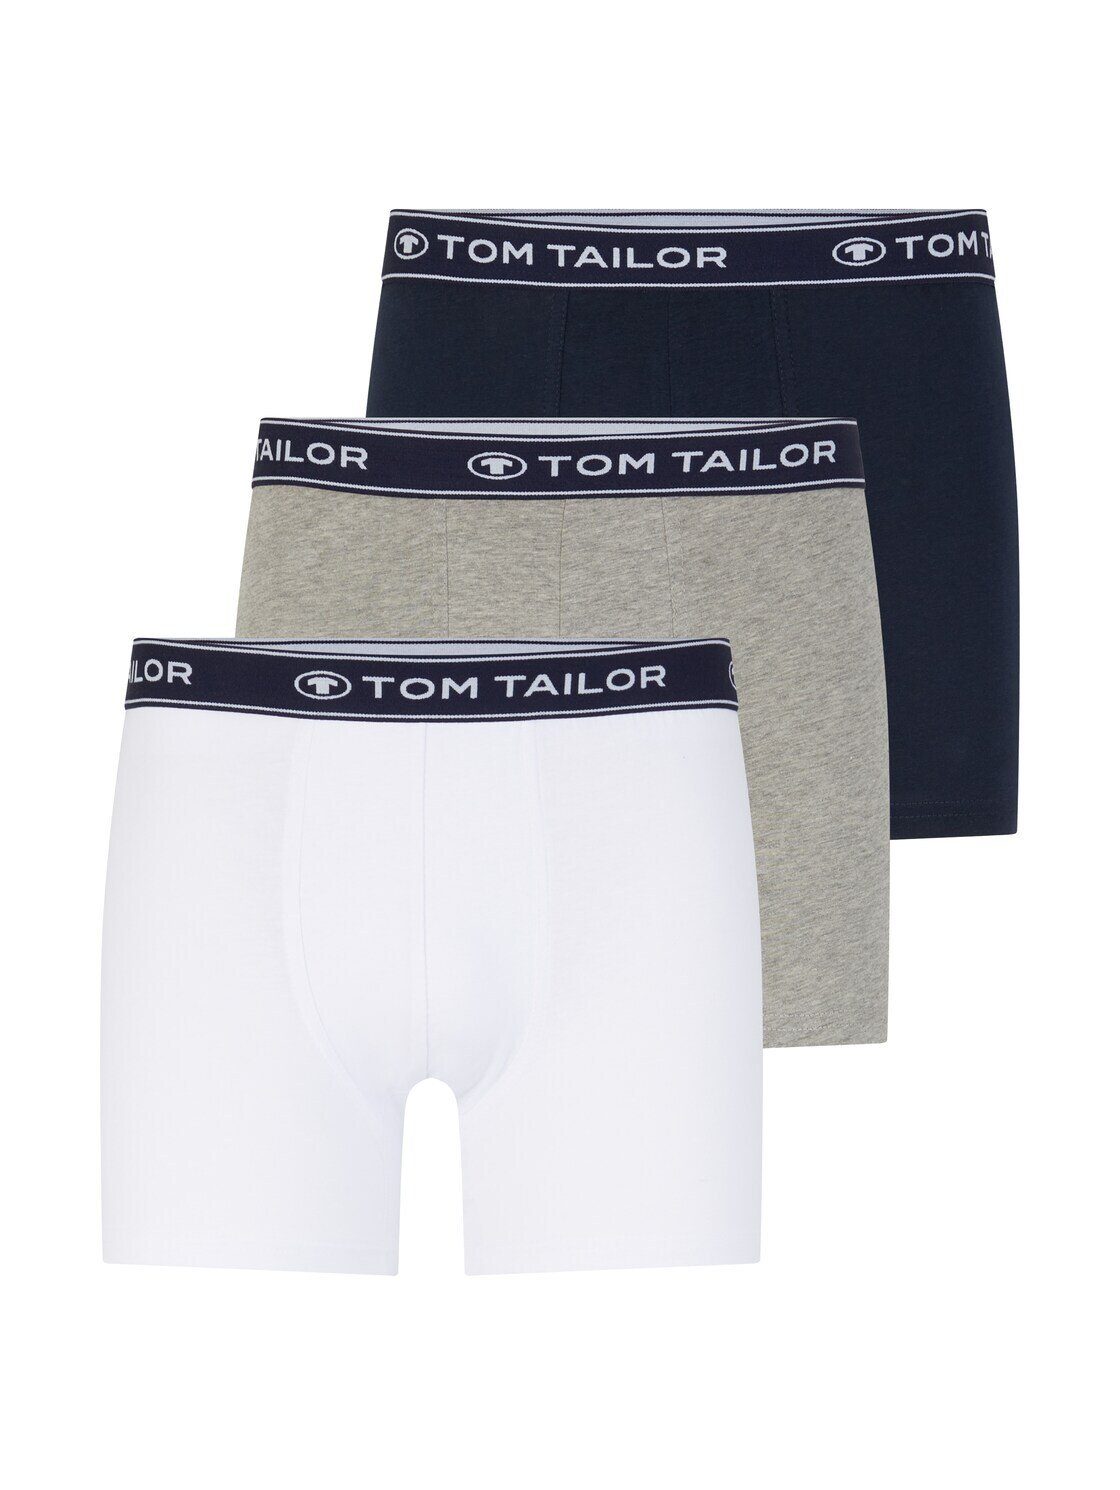 Boxershorts TAILOR navy-melange-white Pants mit Long im TOM (im Webbund Dreierpack) Dreierpack